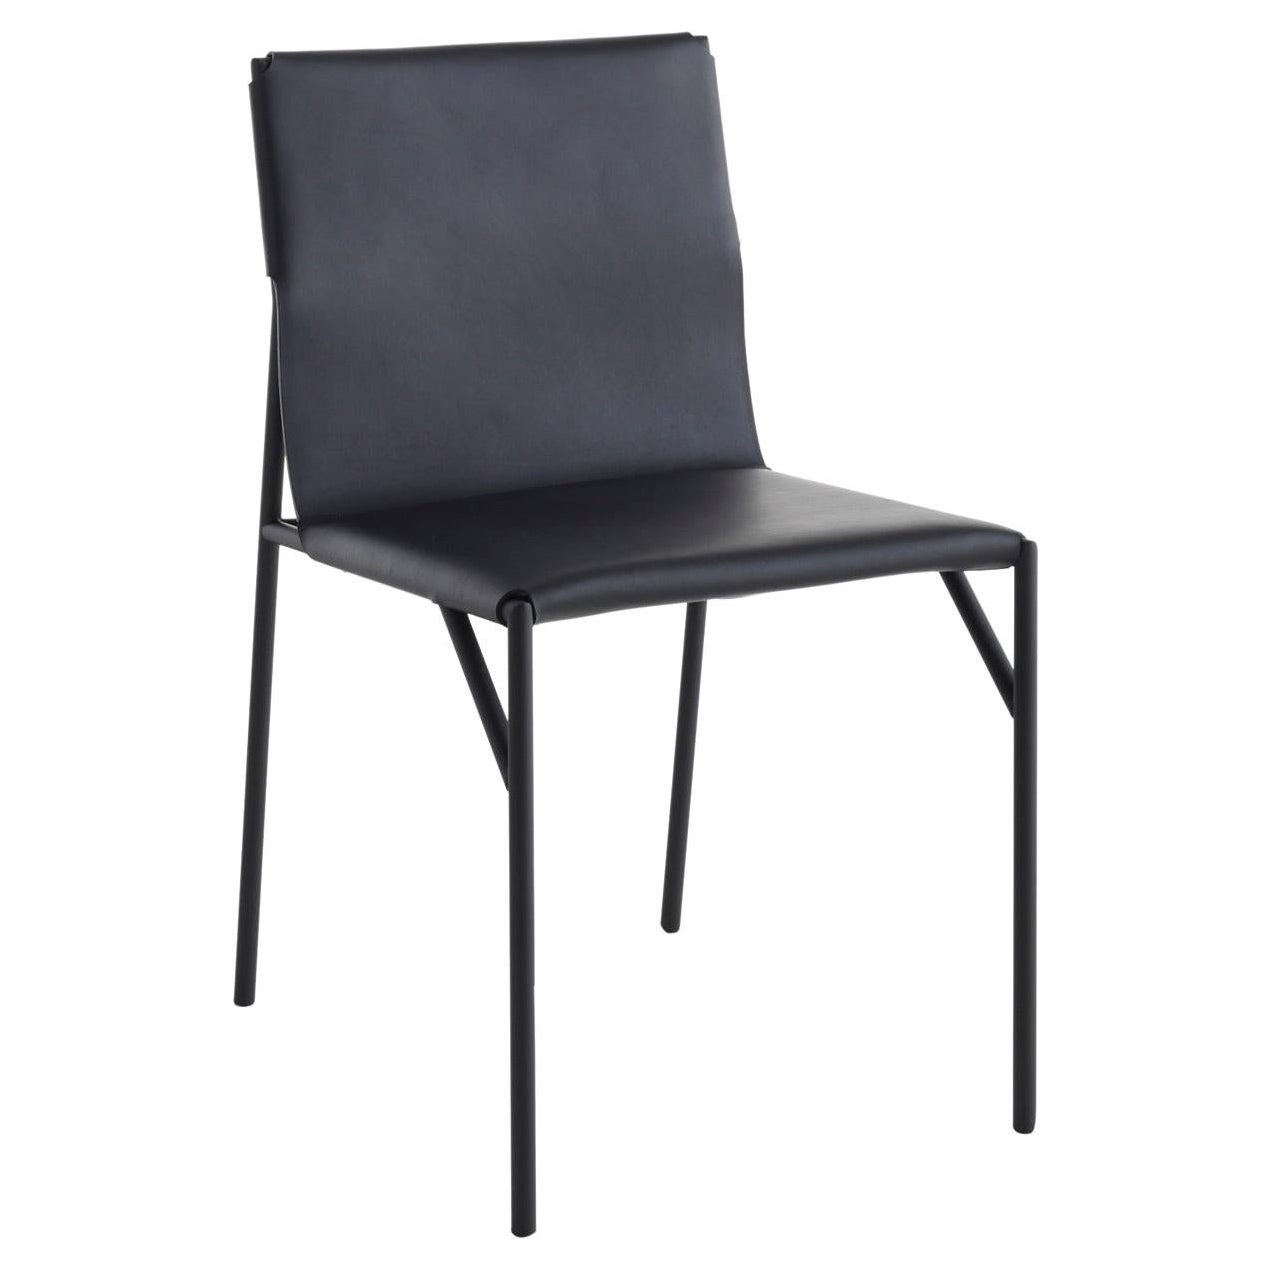 Tout Le Jour Black Leather Chair by Marc Thorpe